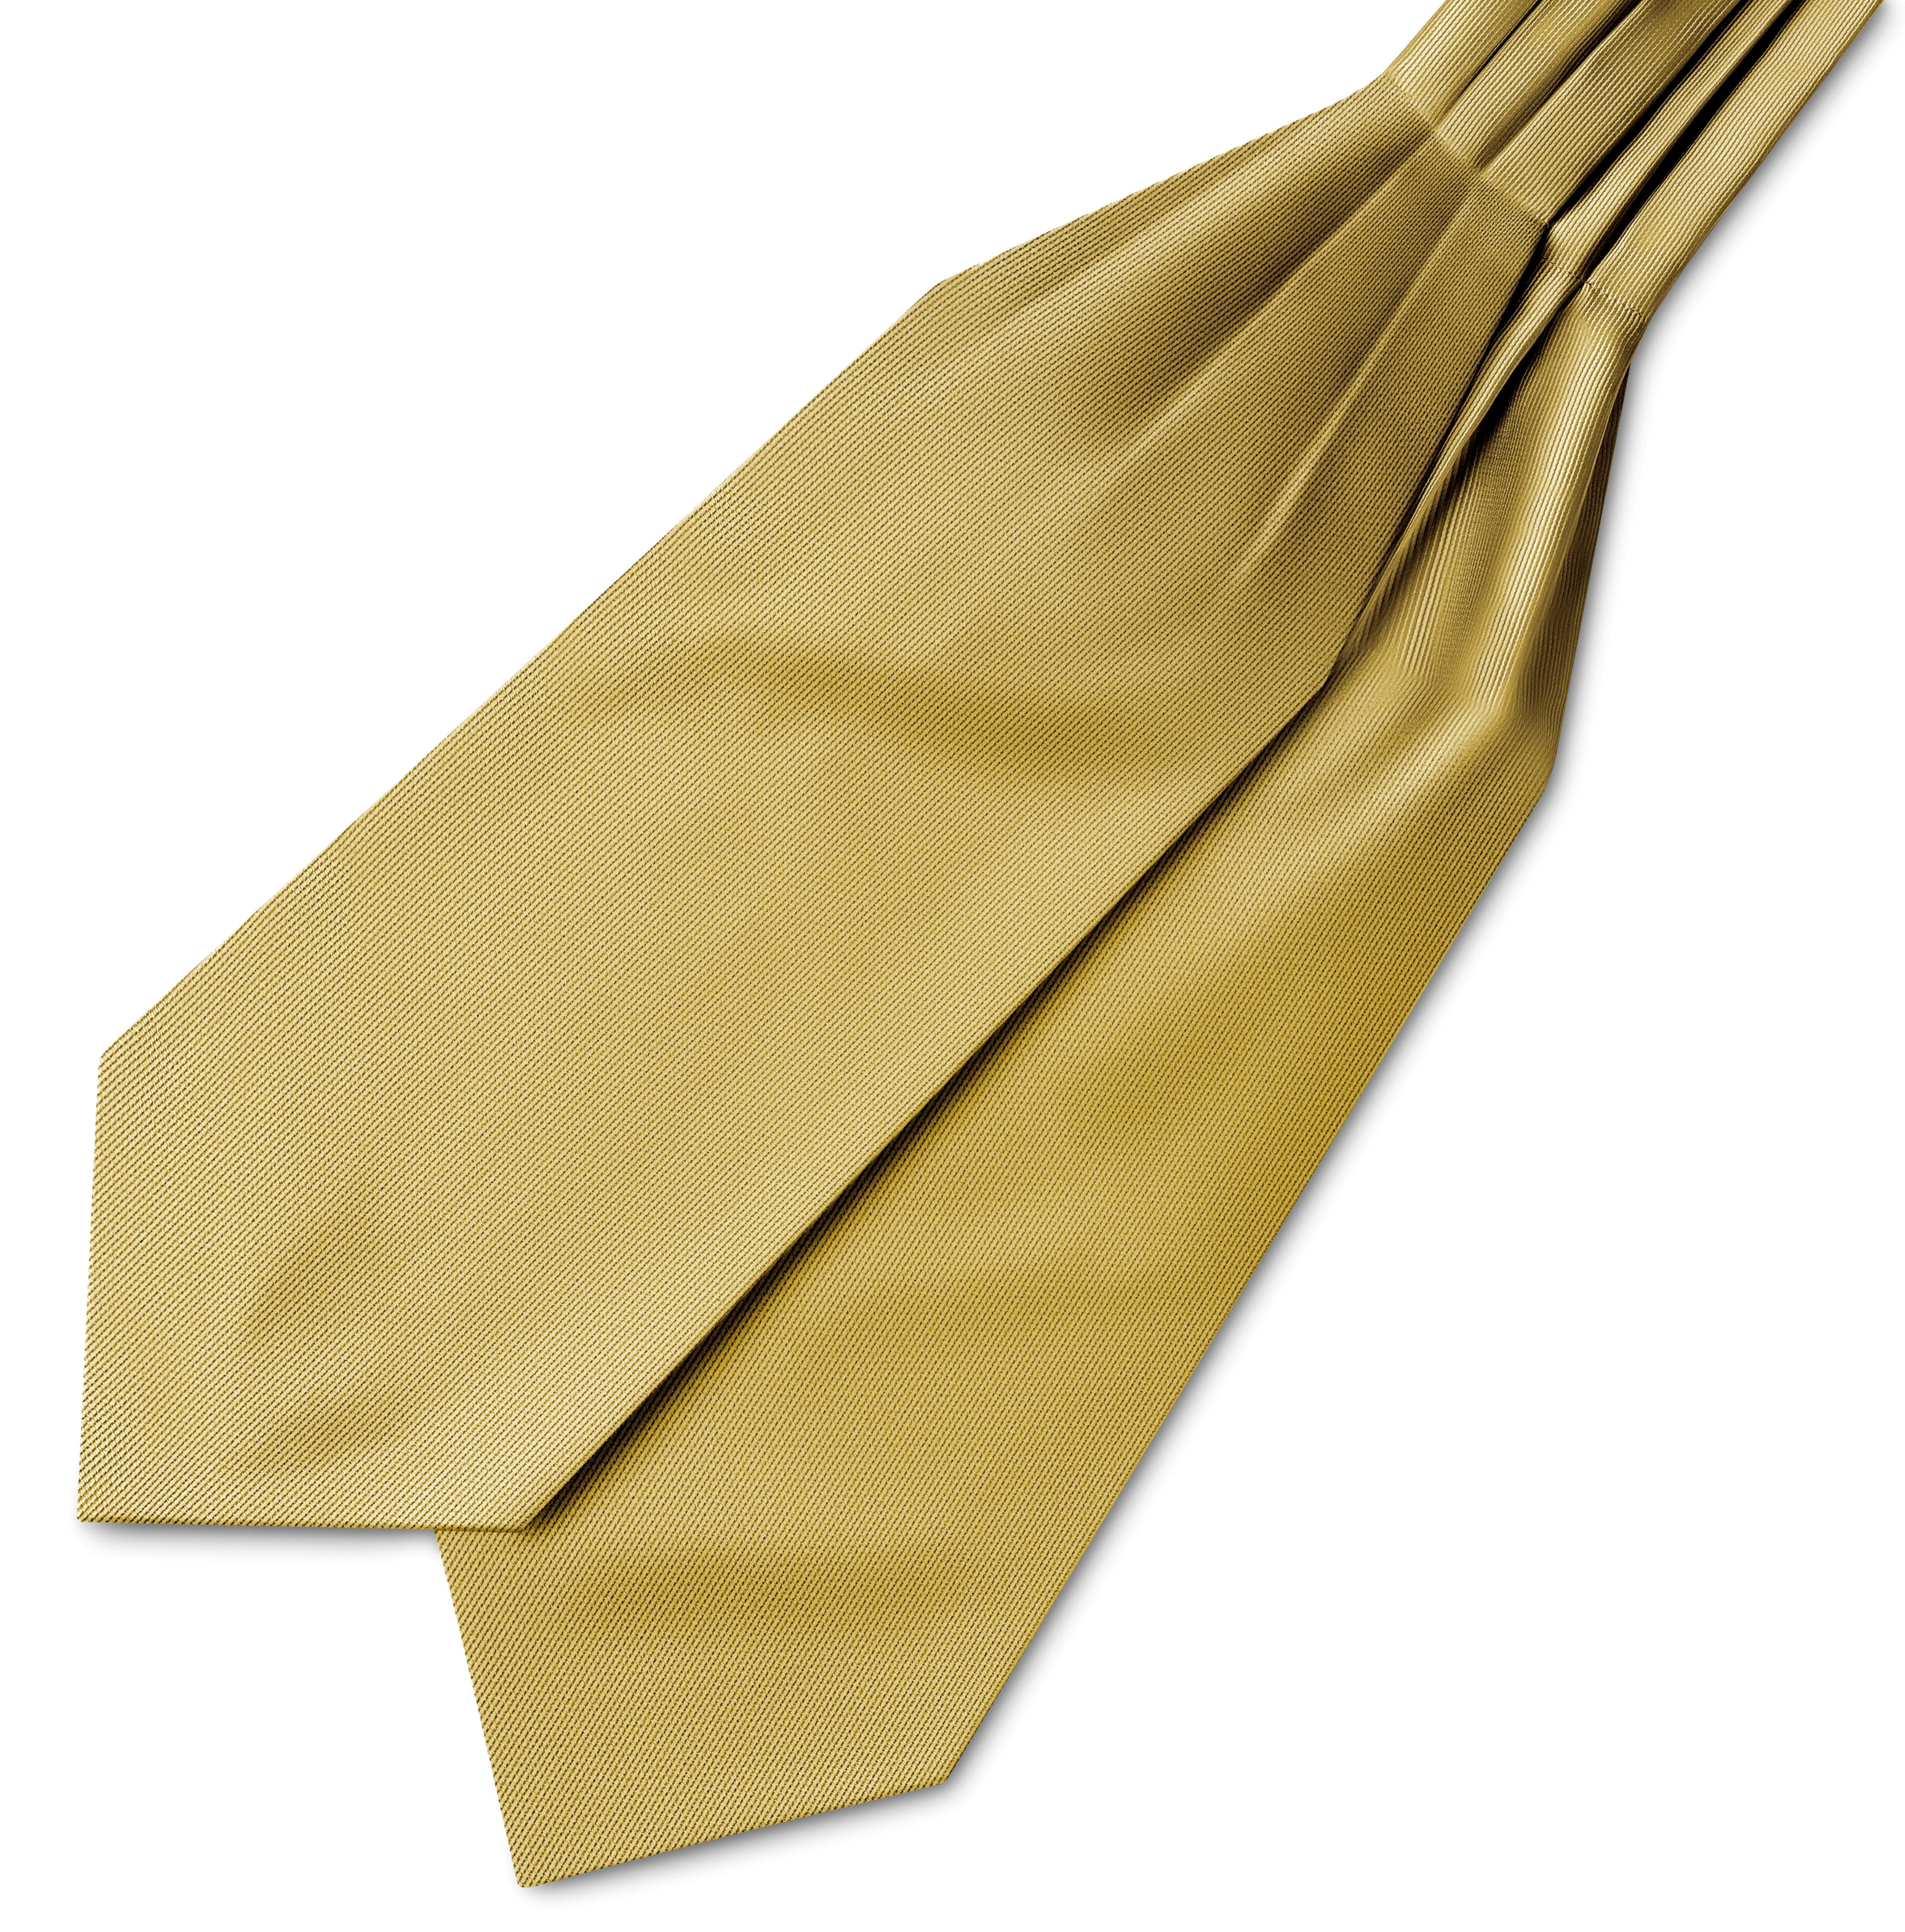 Cravată ascot galben-muștar ripsată